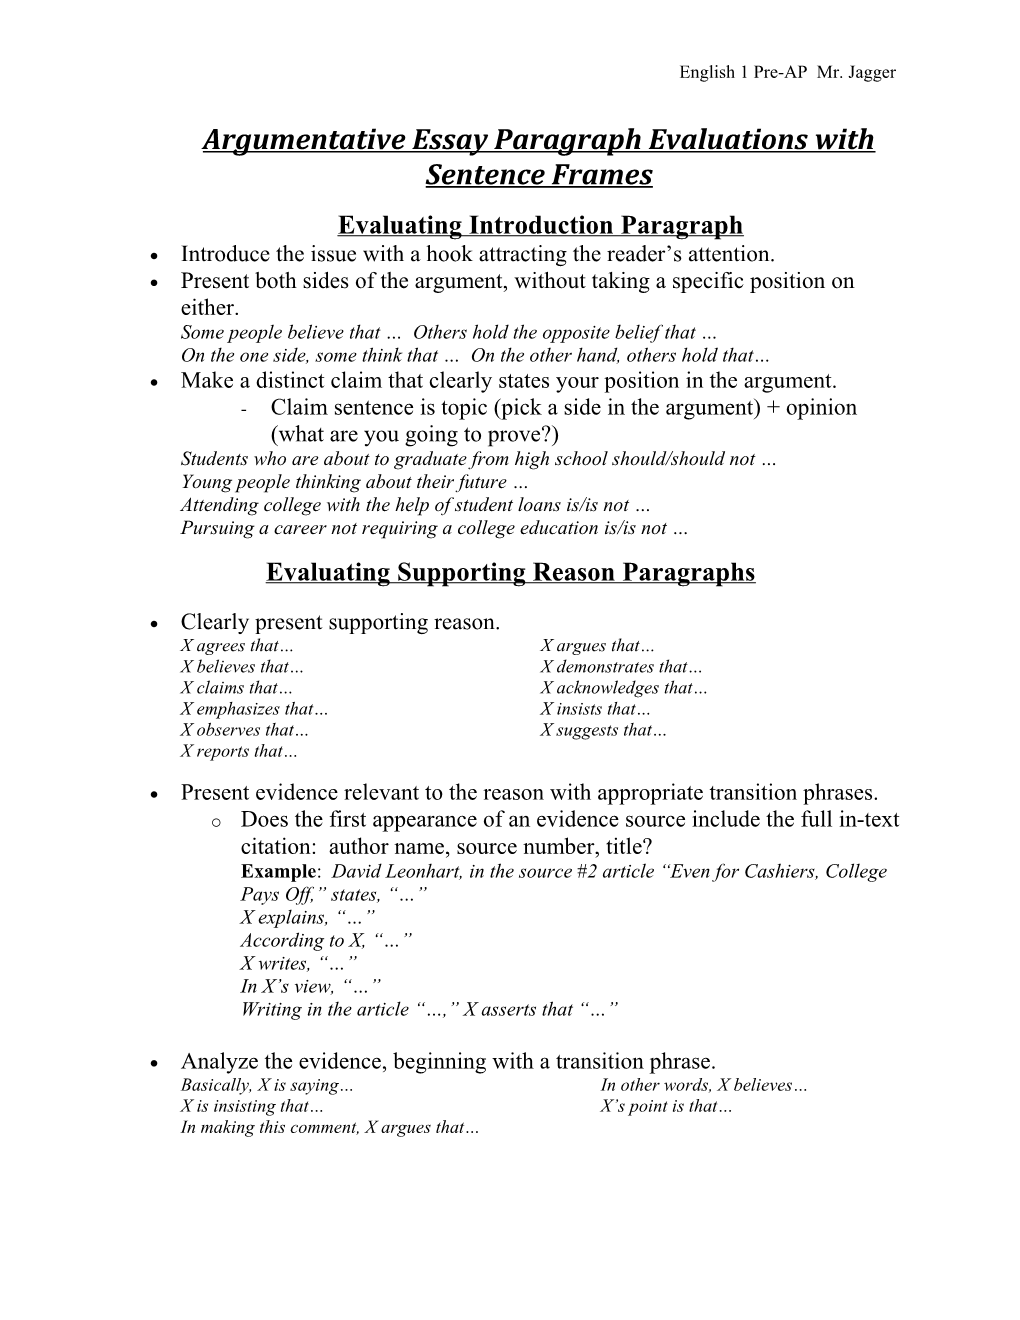 Argumentative Essay Paragraph Evaluations with Sentence Frames